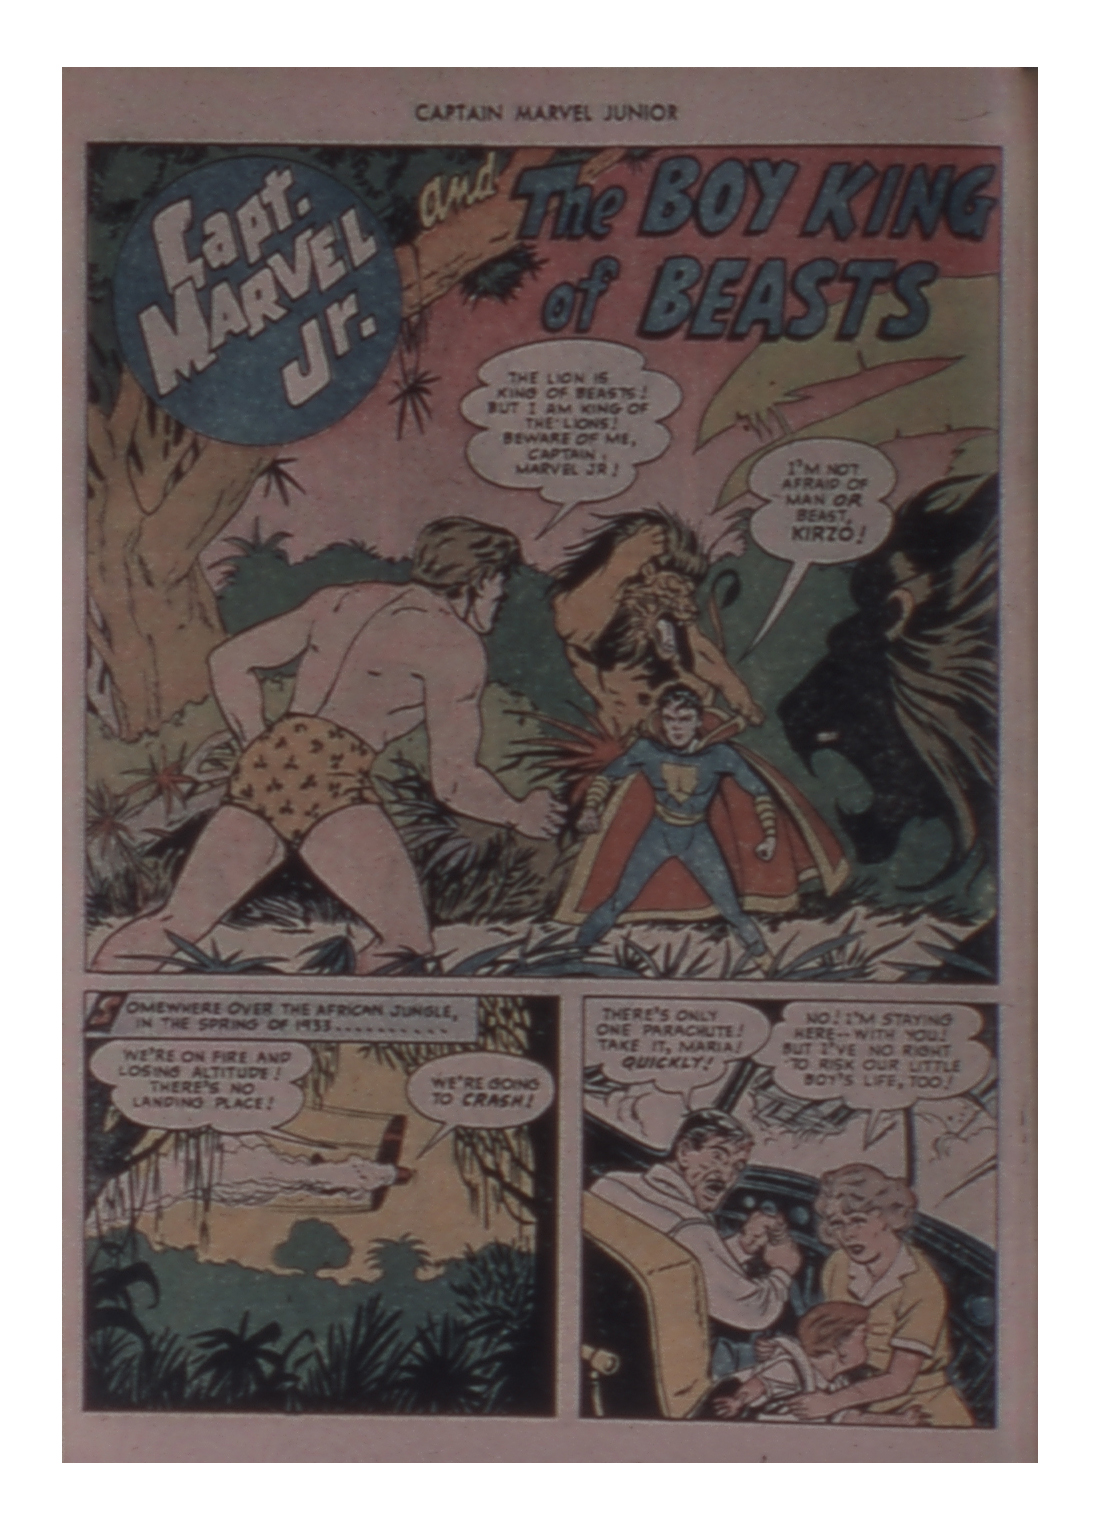 Read online Captain Marvel, Jr. comic -  Issue #81 - 26